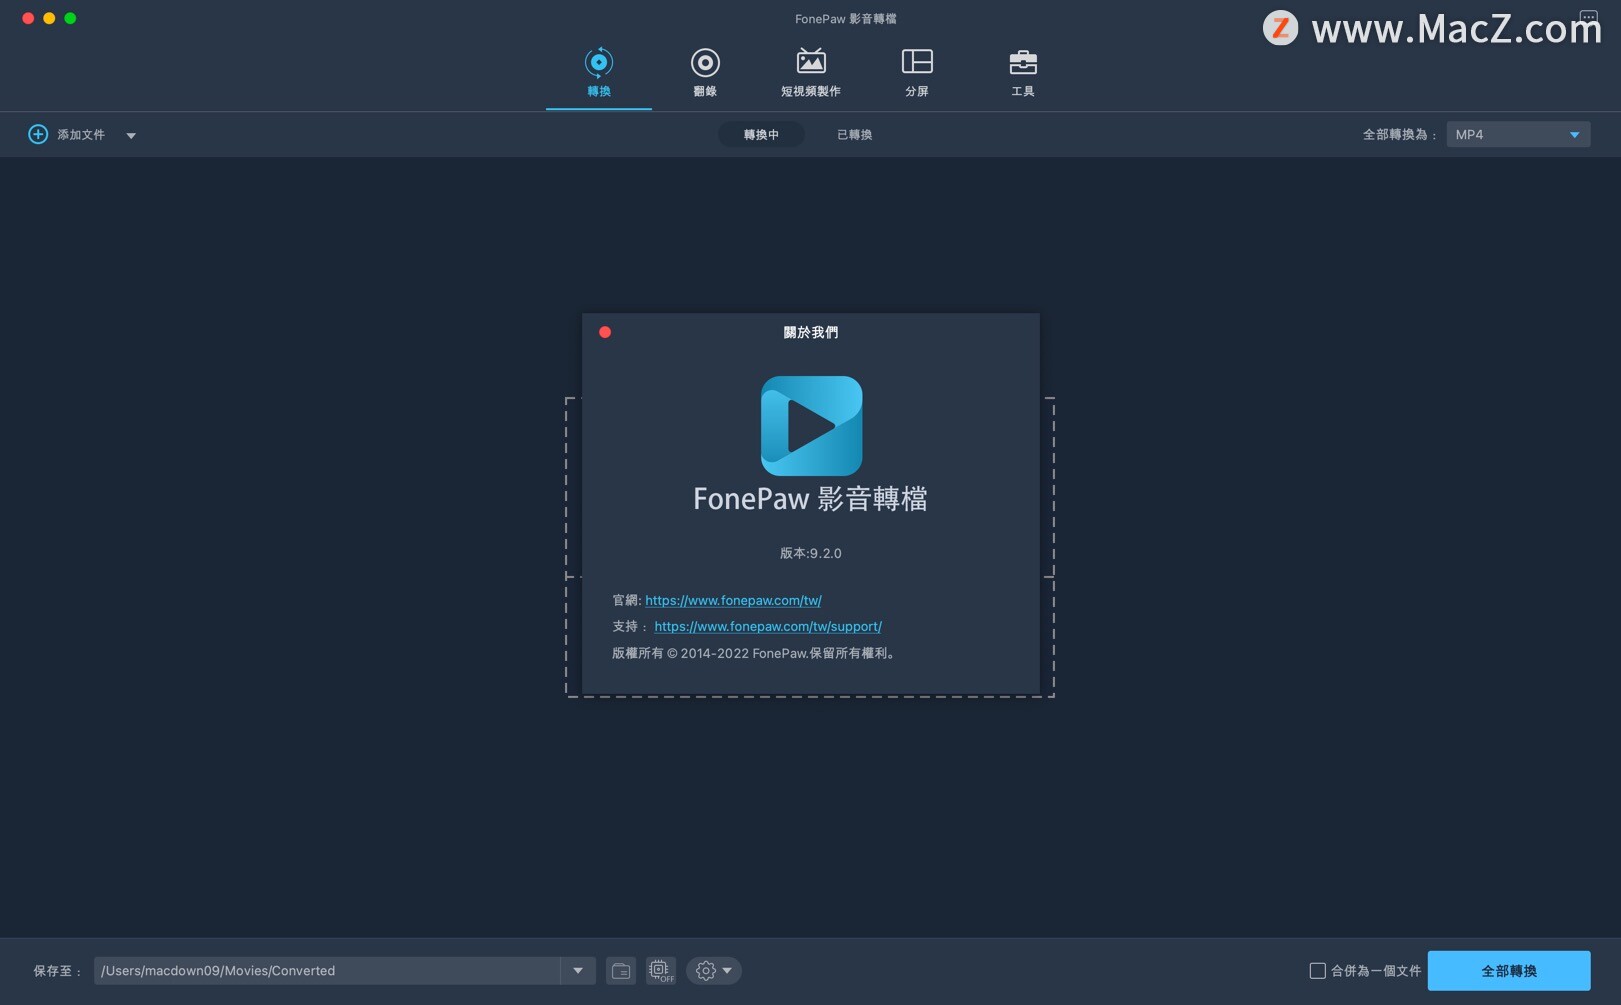 FonePaw Video Converter Ultimate 8.2 free downloads